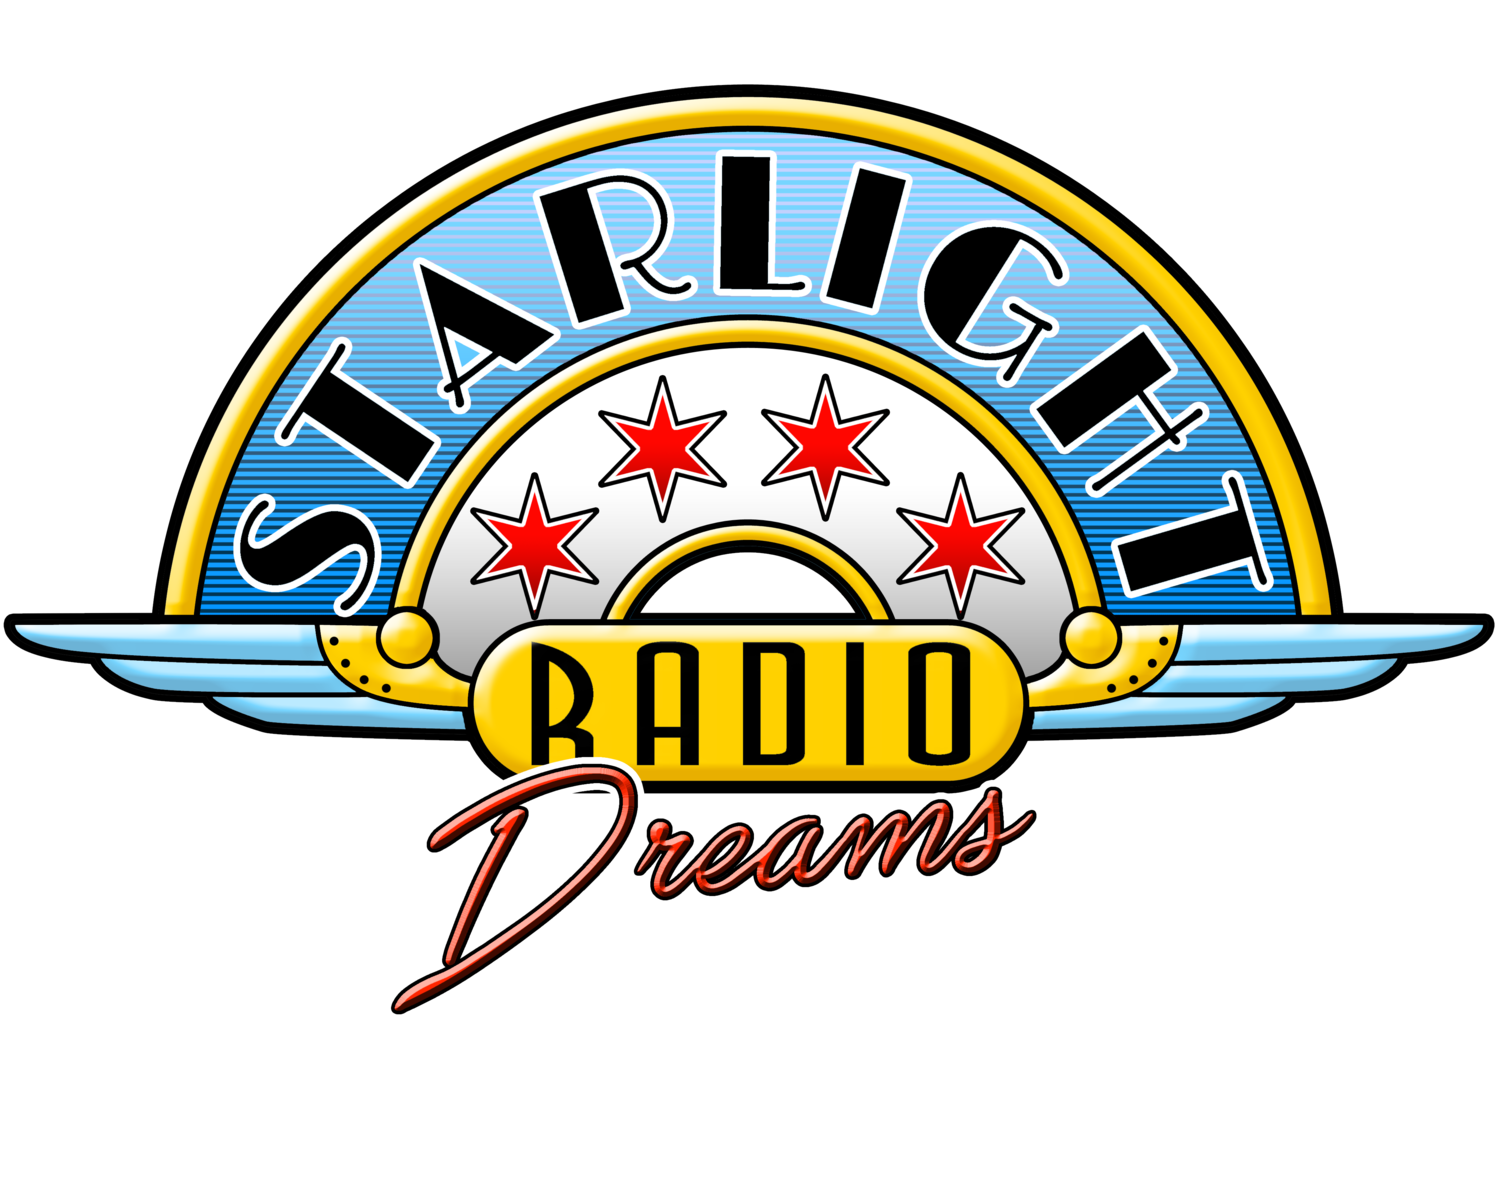 Starlight Radio Dreams